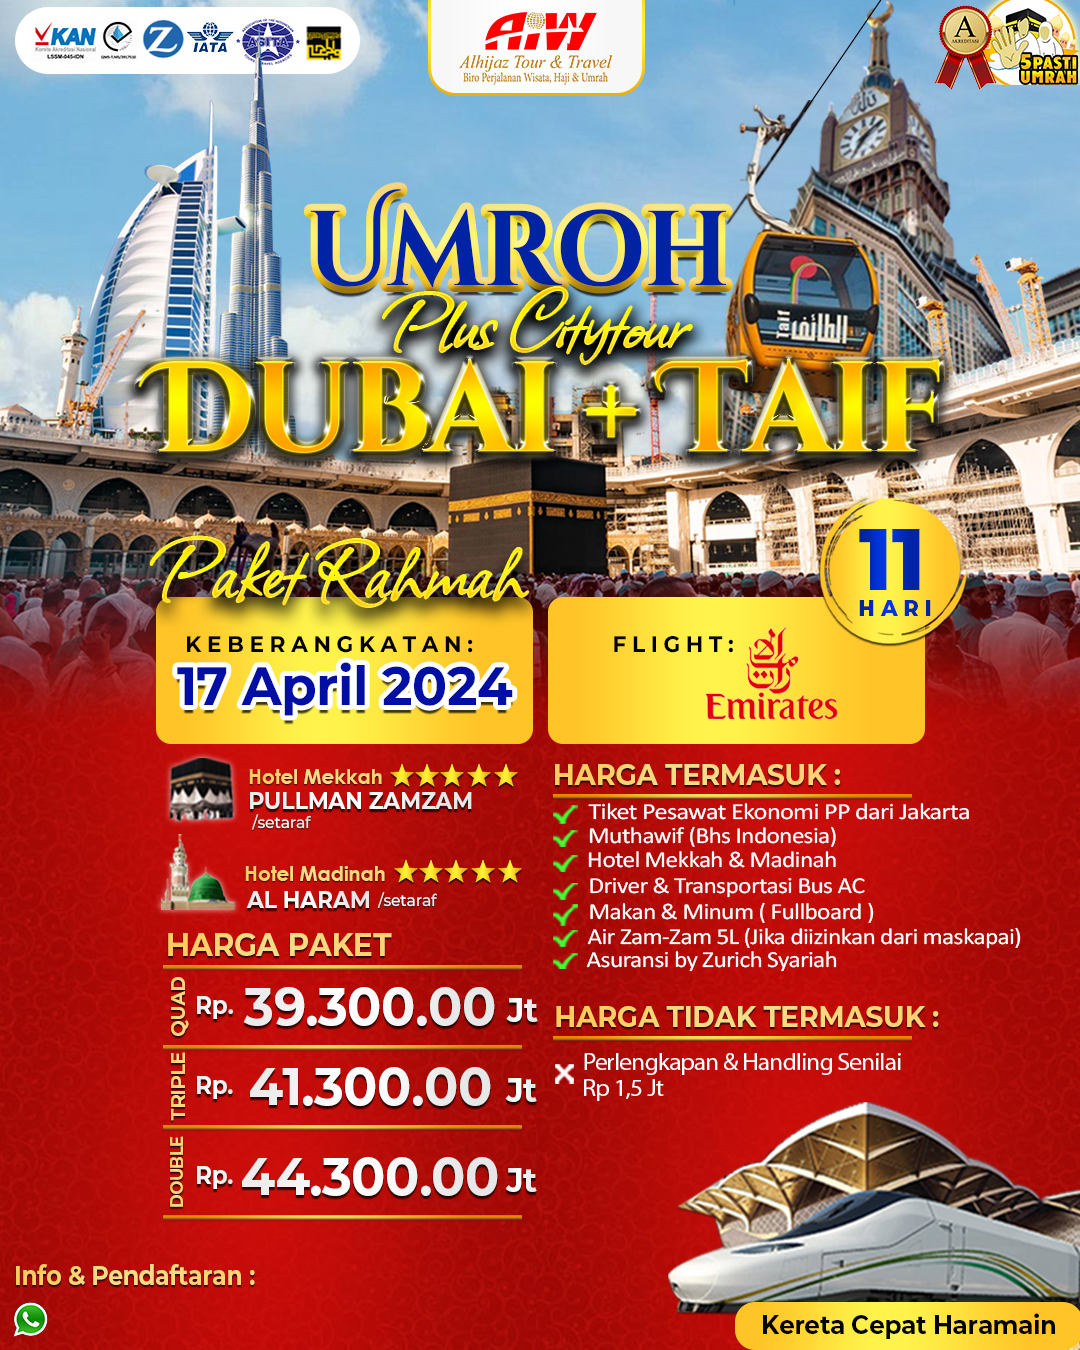 UMROH PLUS DUBAI+TAIF 11HR (KERETA CEPAT-PAKET RAHMAH)
Program 11 Hari - Tgl 17 April 2024